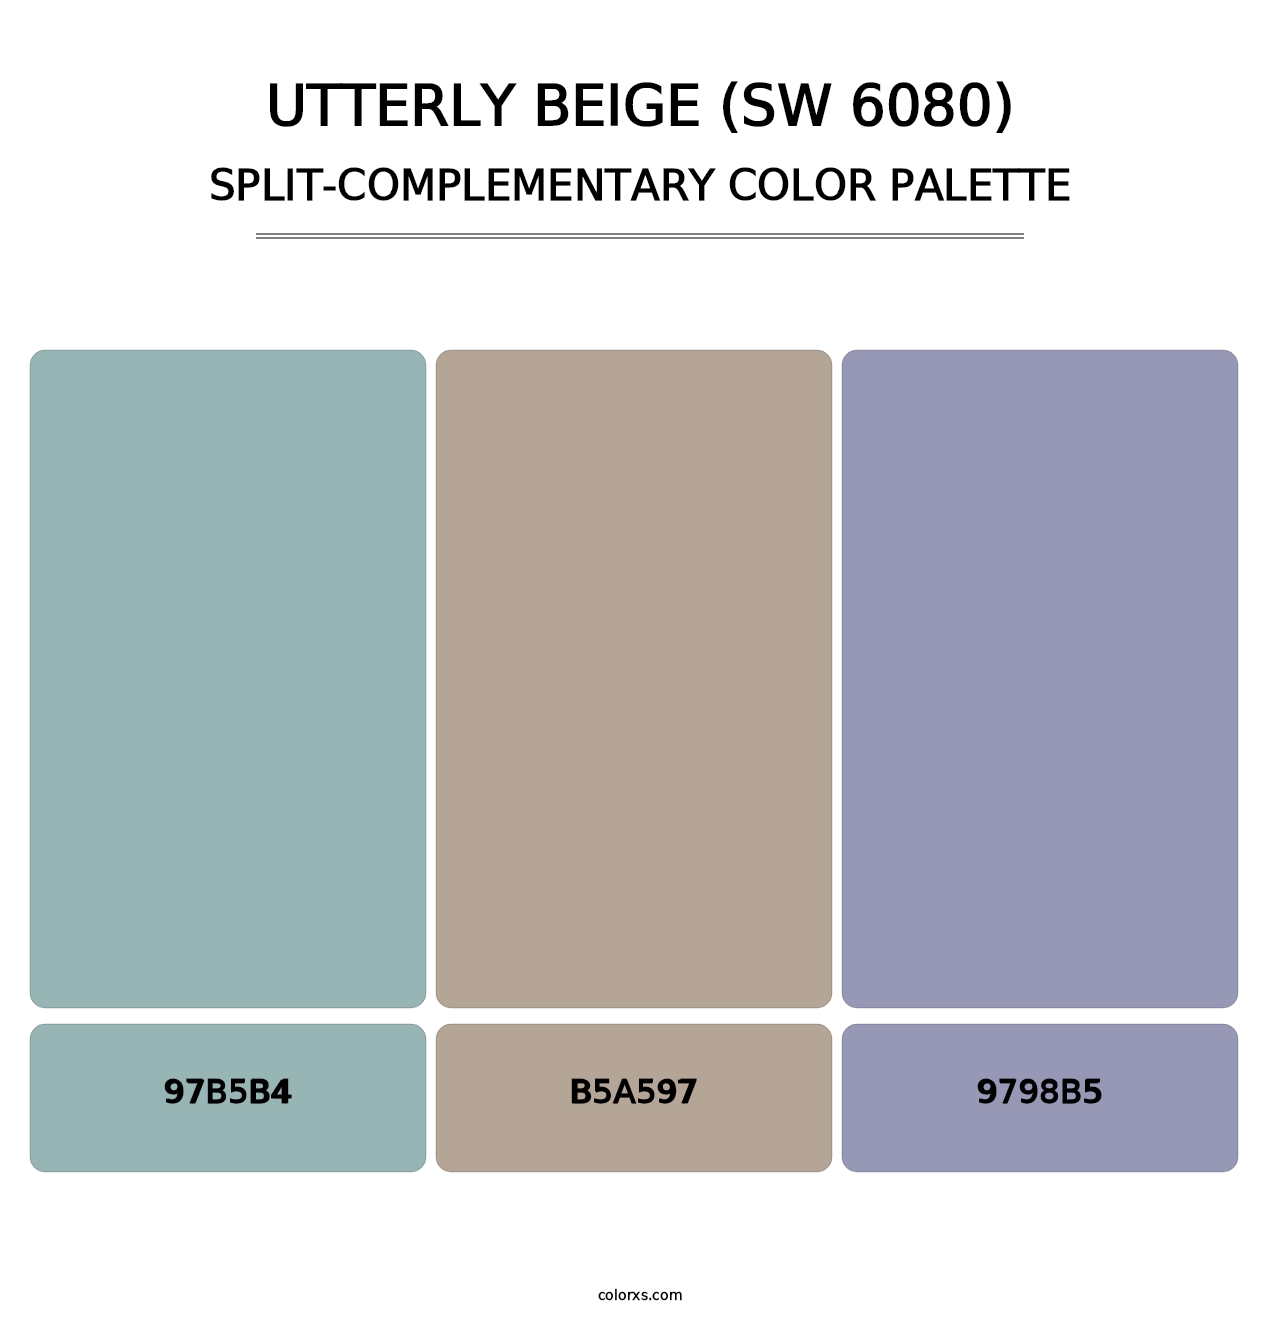 Utterly Beige (SW 6080) - Split-Complementary Color Palette